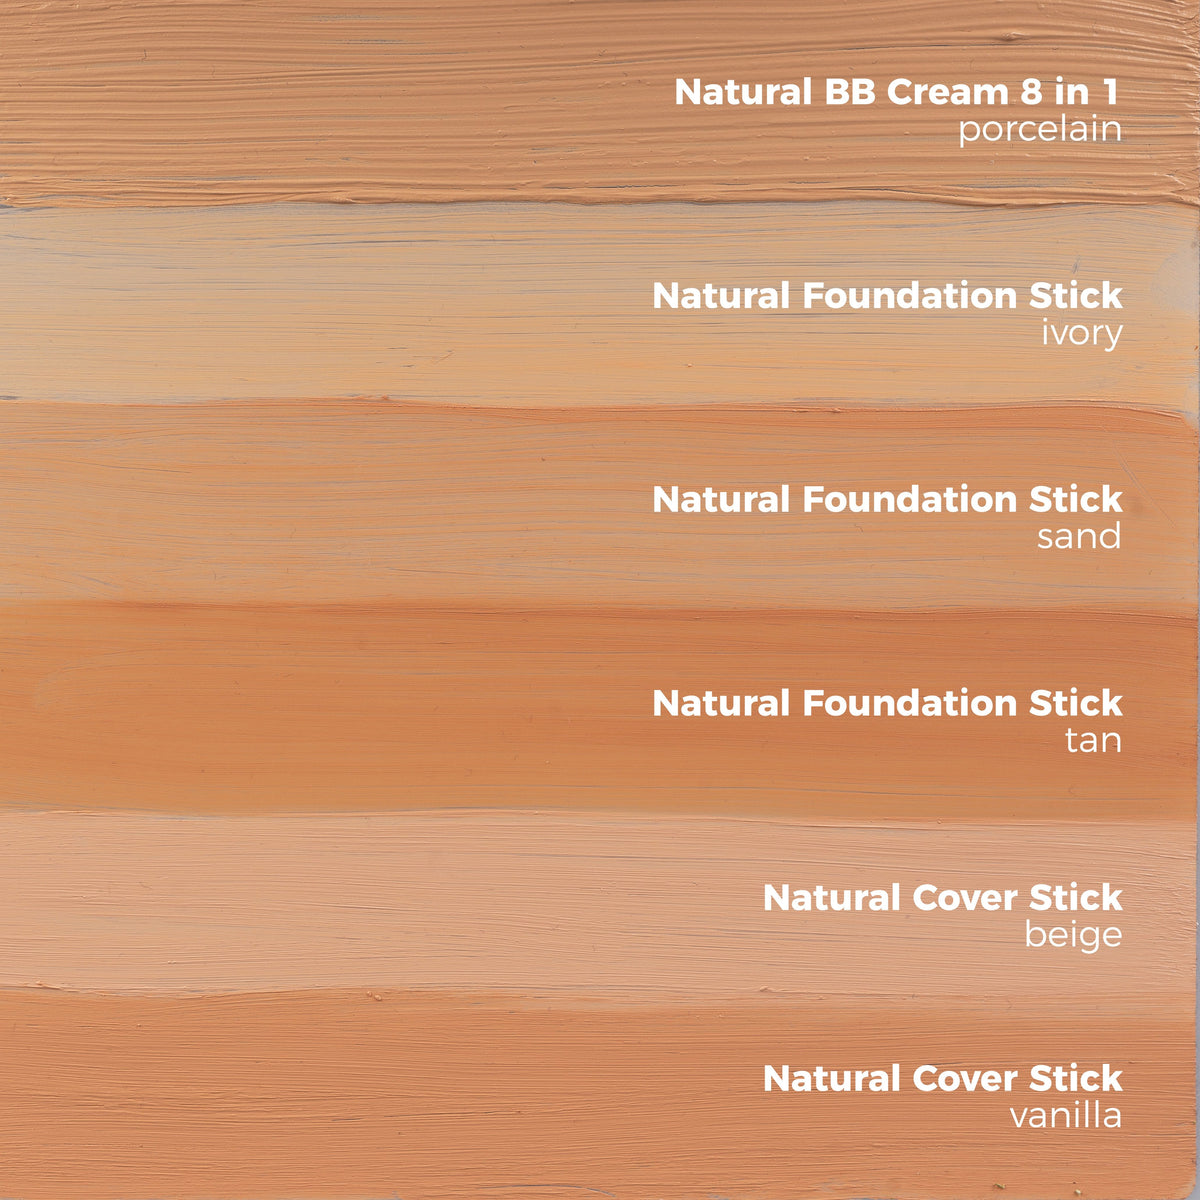 foundation stick tan